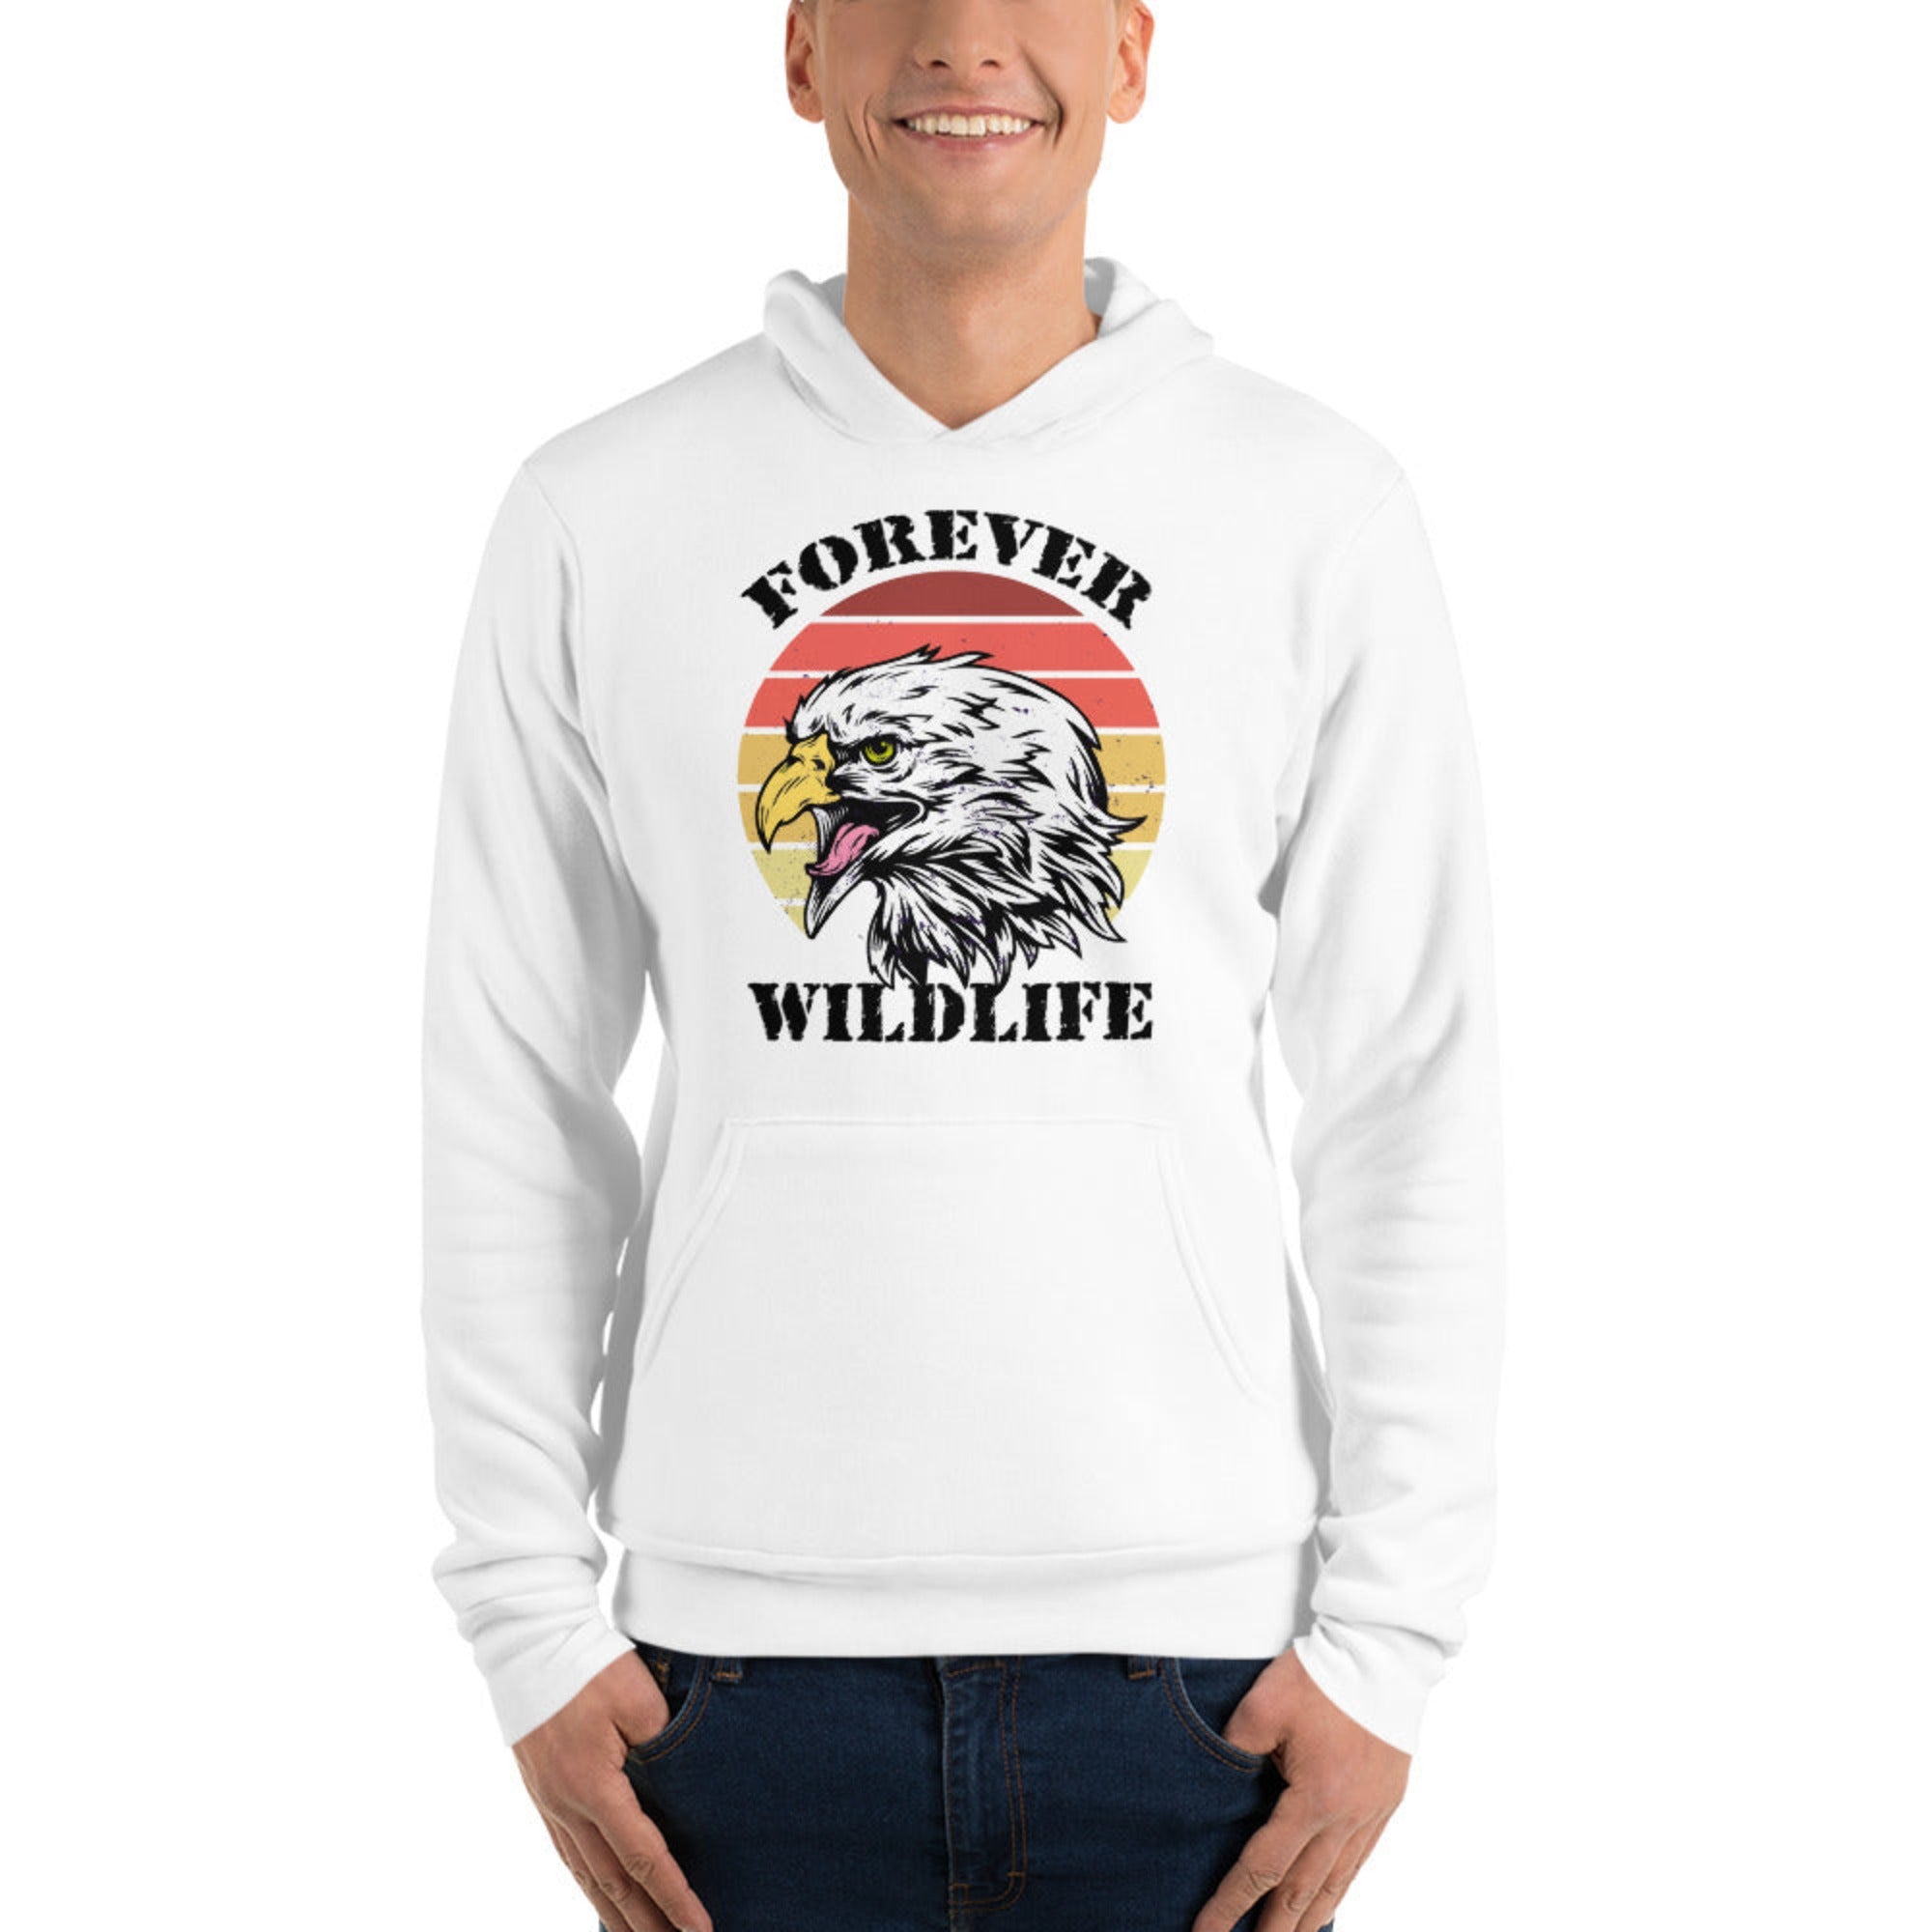 Men wearing White Eagle Hoodie, Premium Wildlife Animal Inspirational Hoodie Design, part of Wildlife Hoodies & Clothing from Forever Wildlife